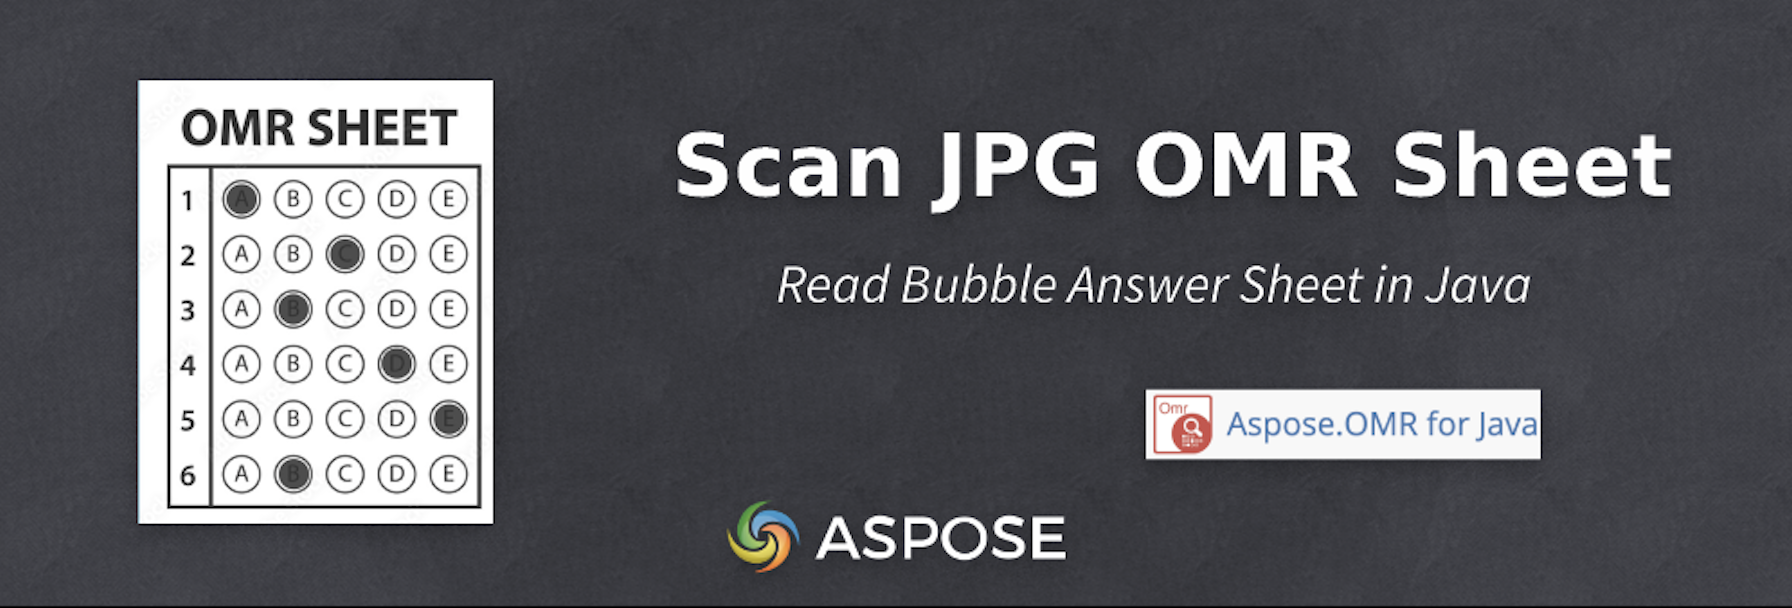 Java 中的掃描氣泡答案紙 - OMR Sheet JPG